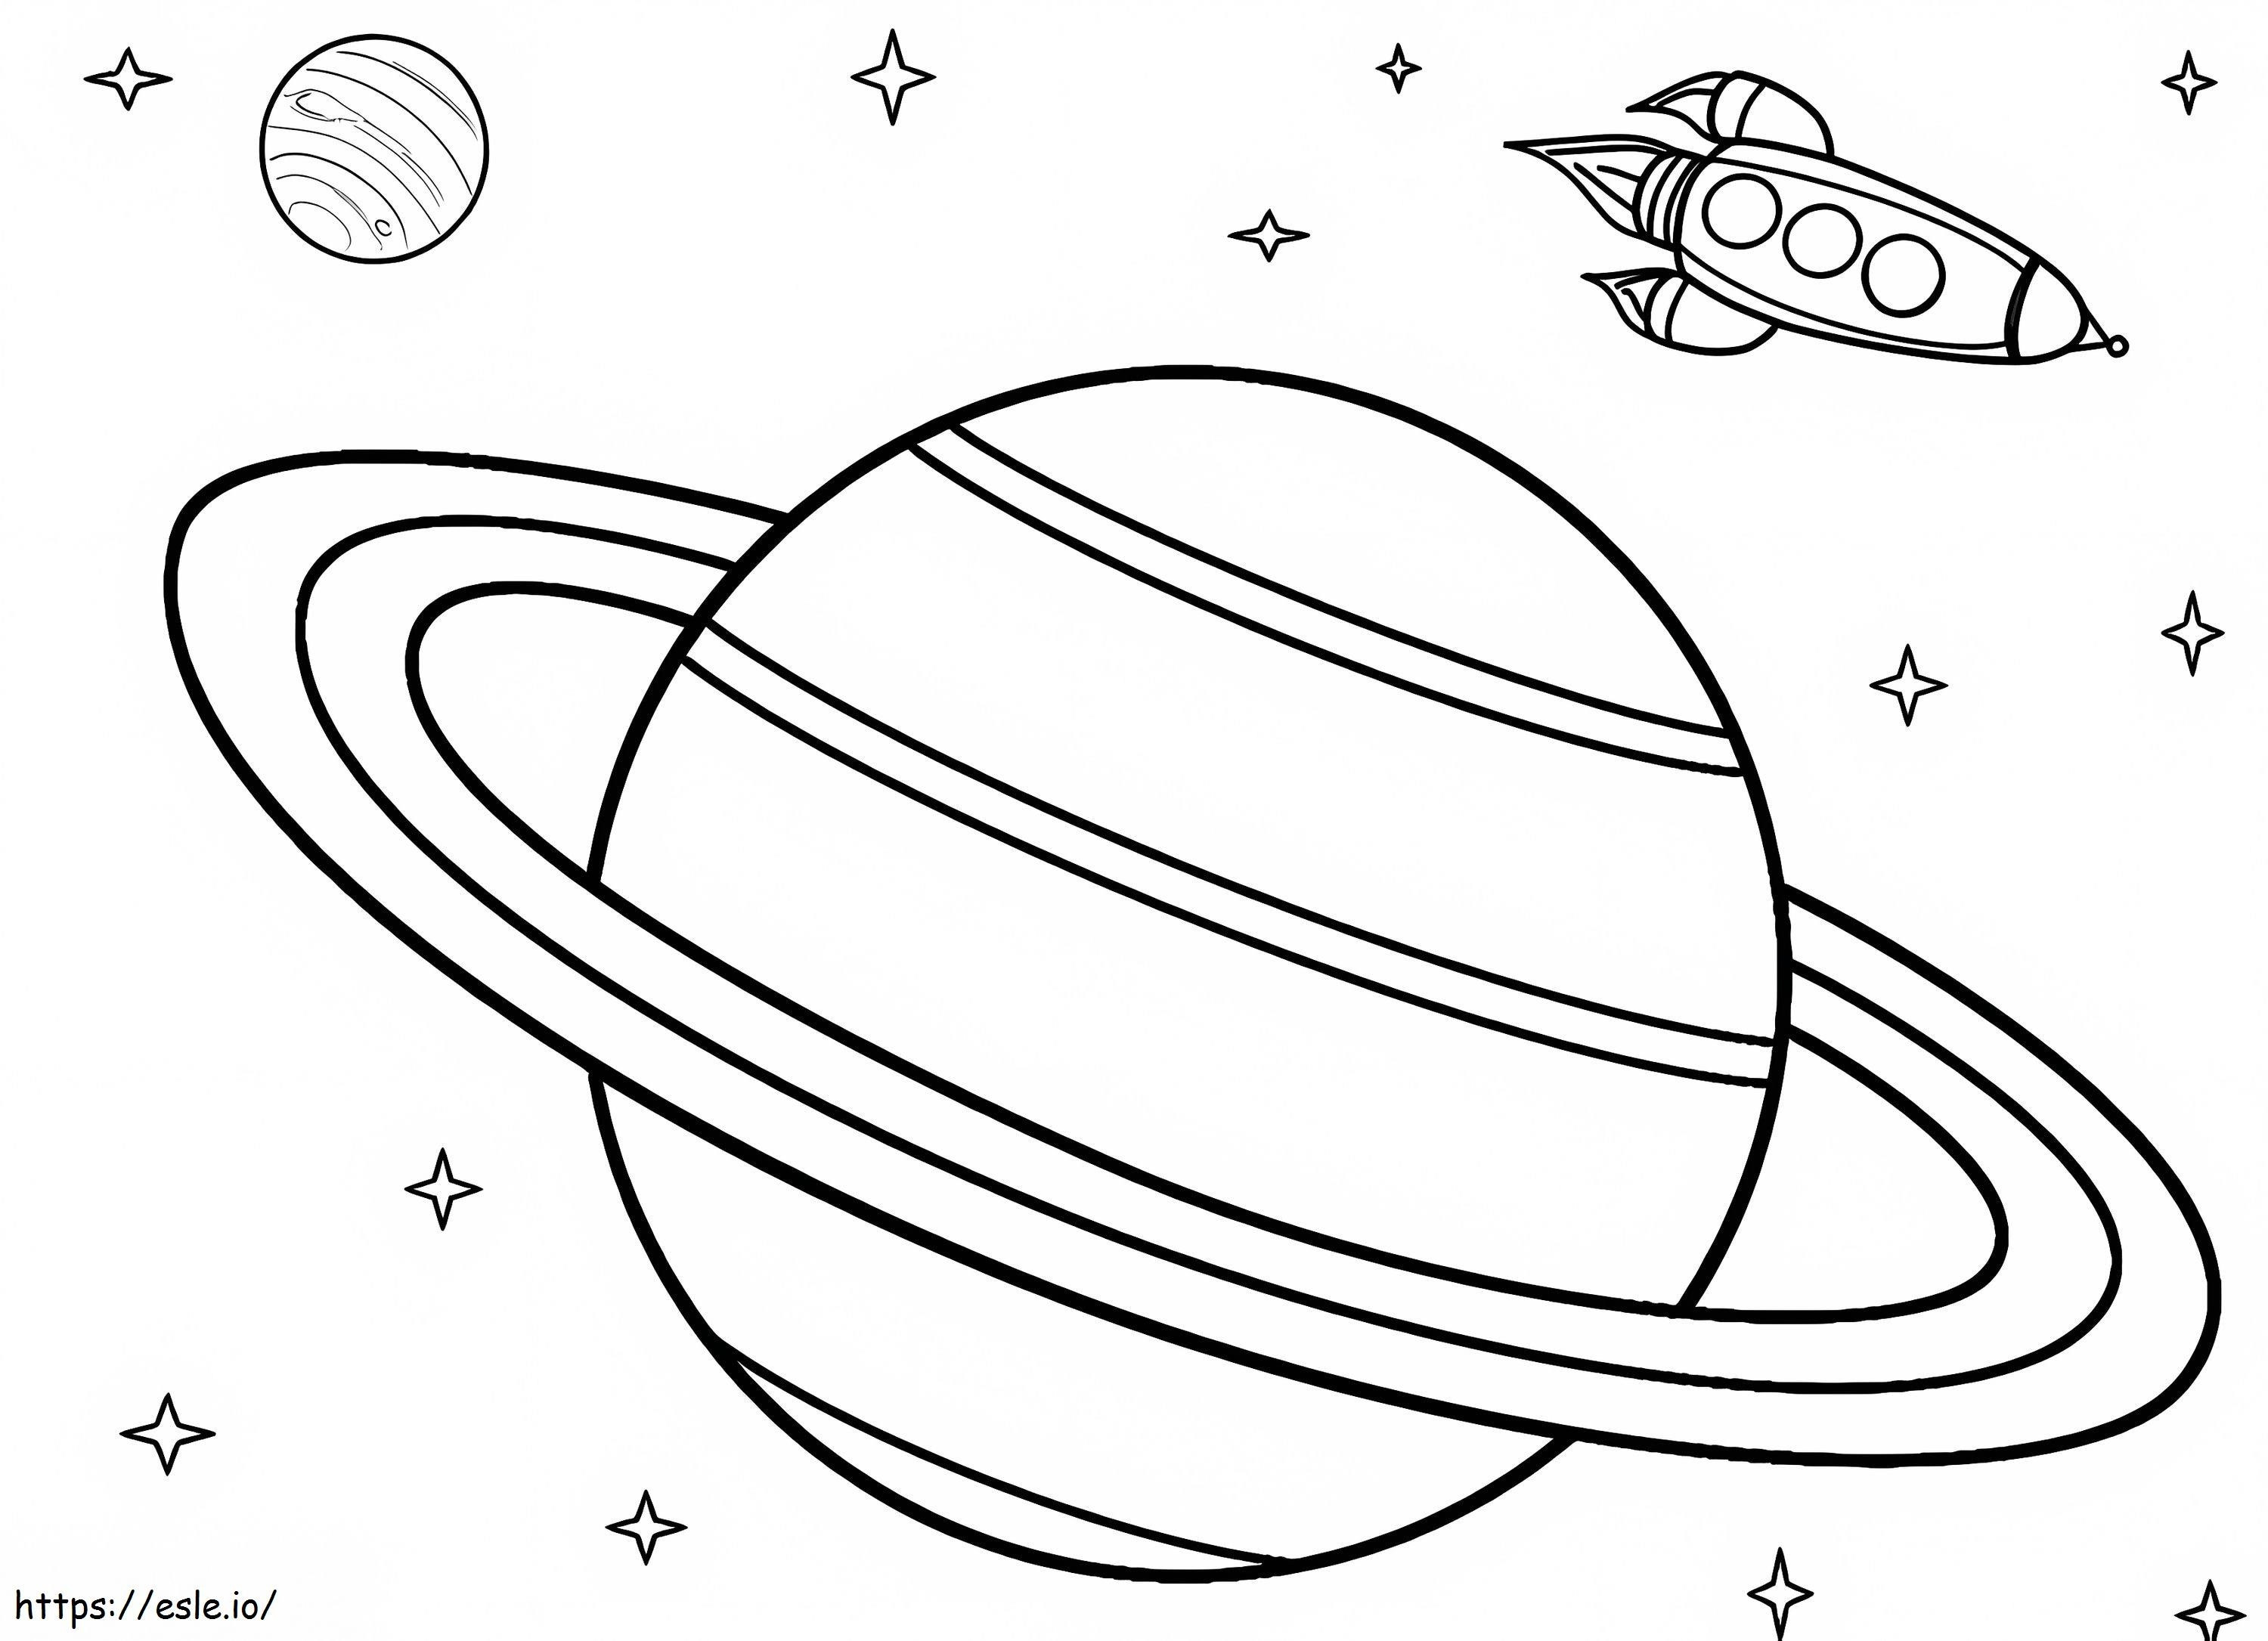 Saturno e nave espacial para colorir